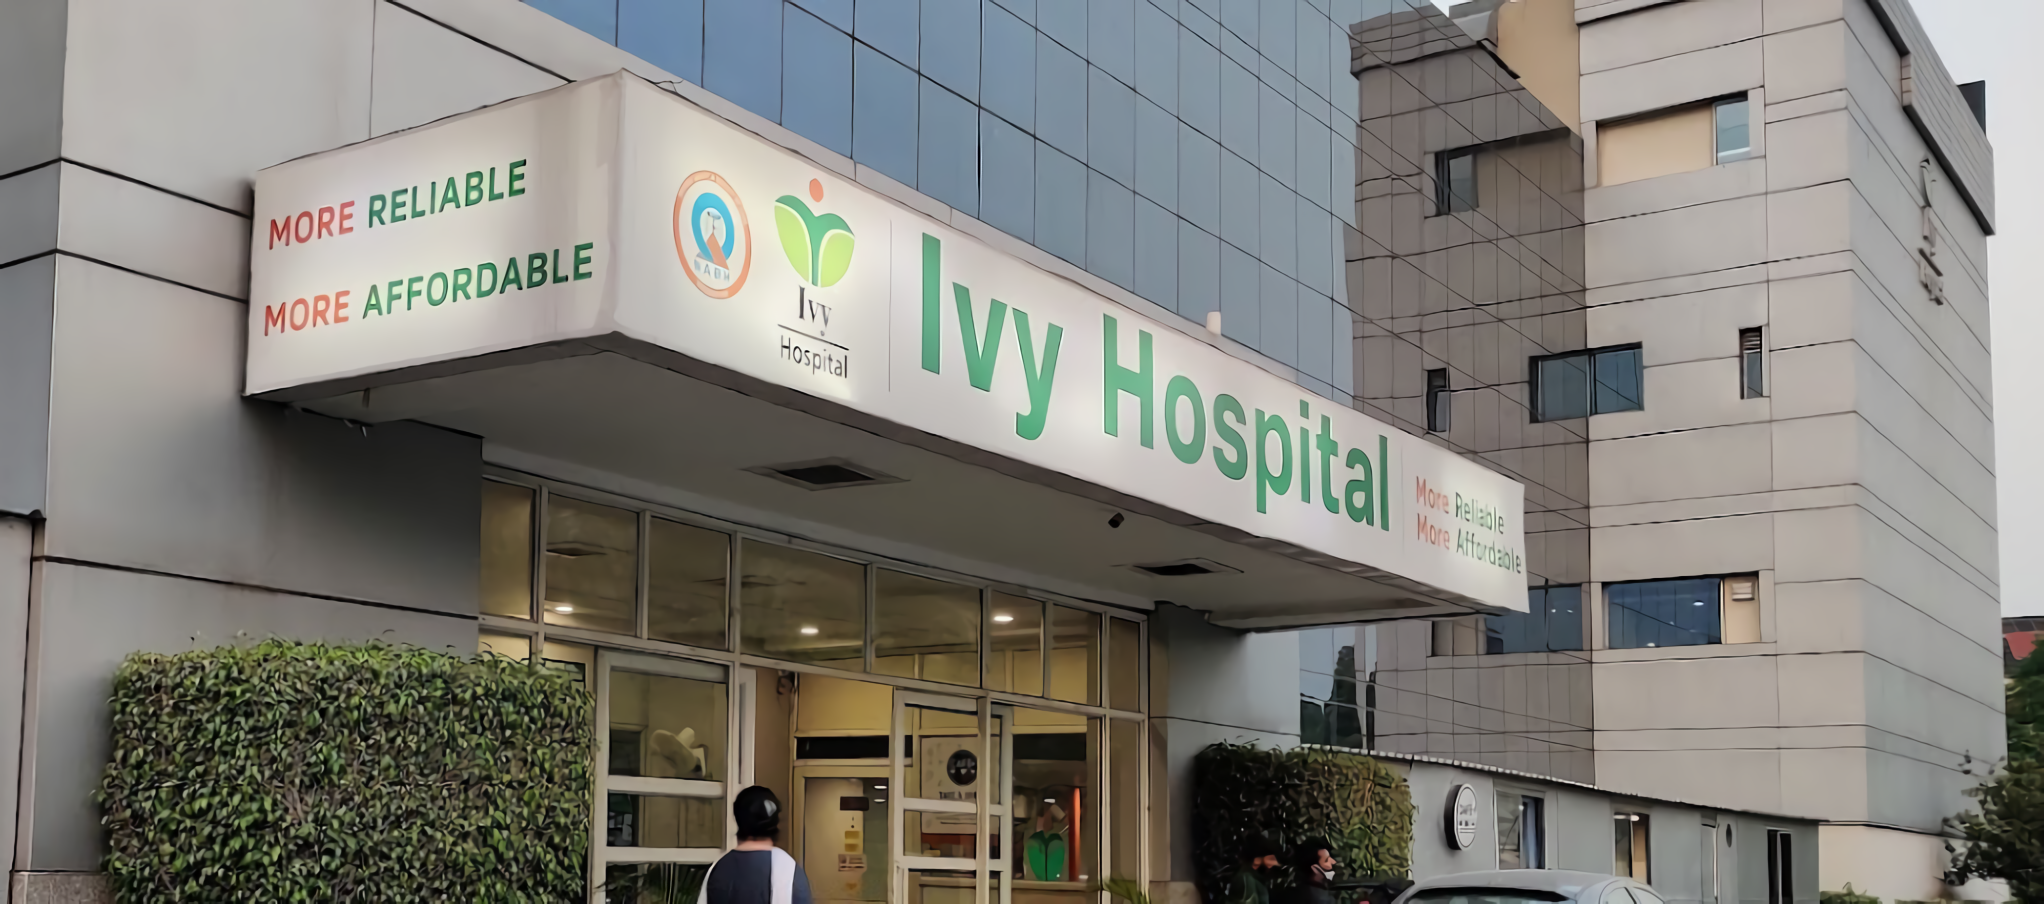 IVY Hospital